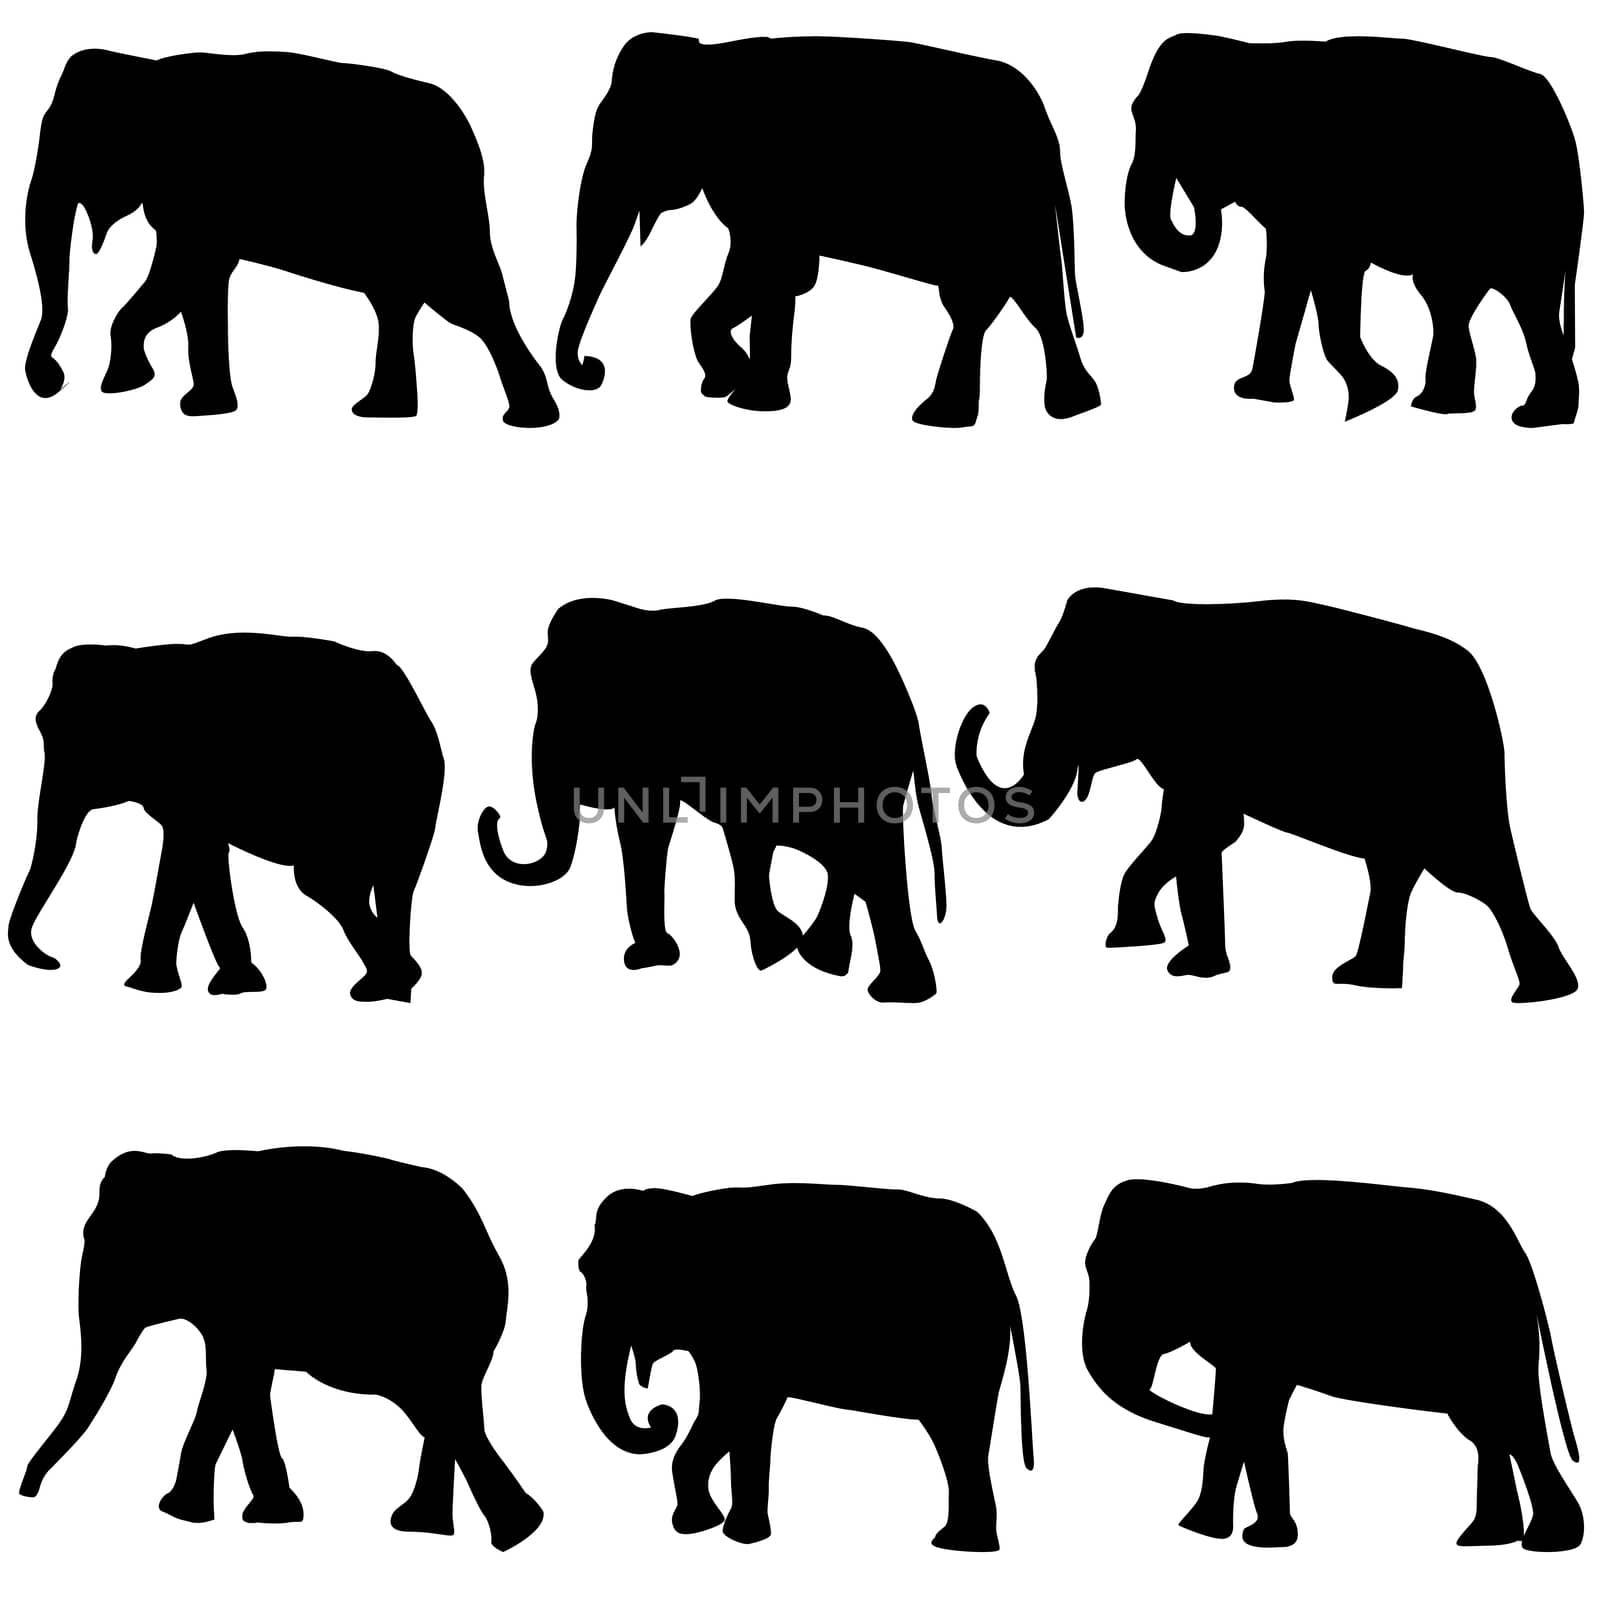 Elephants silhouettes set by hibrida13